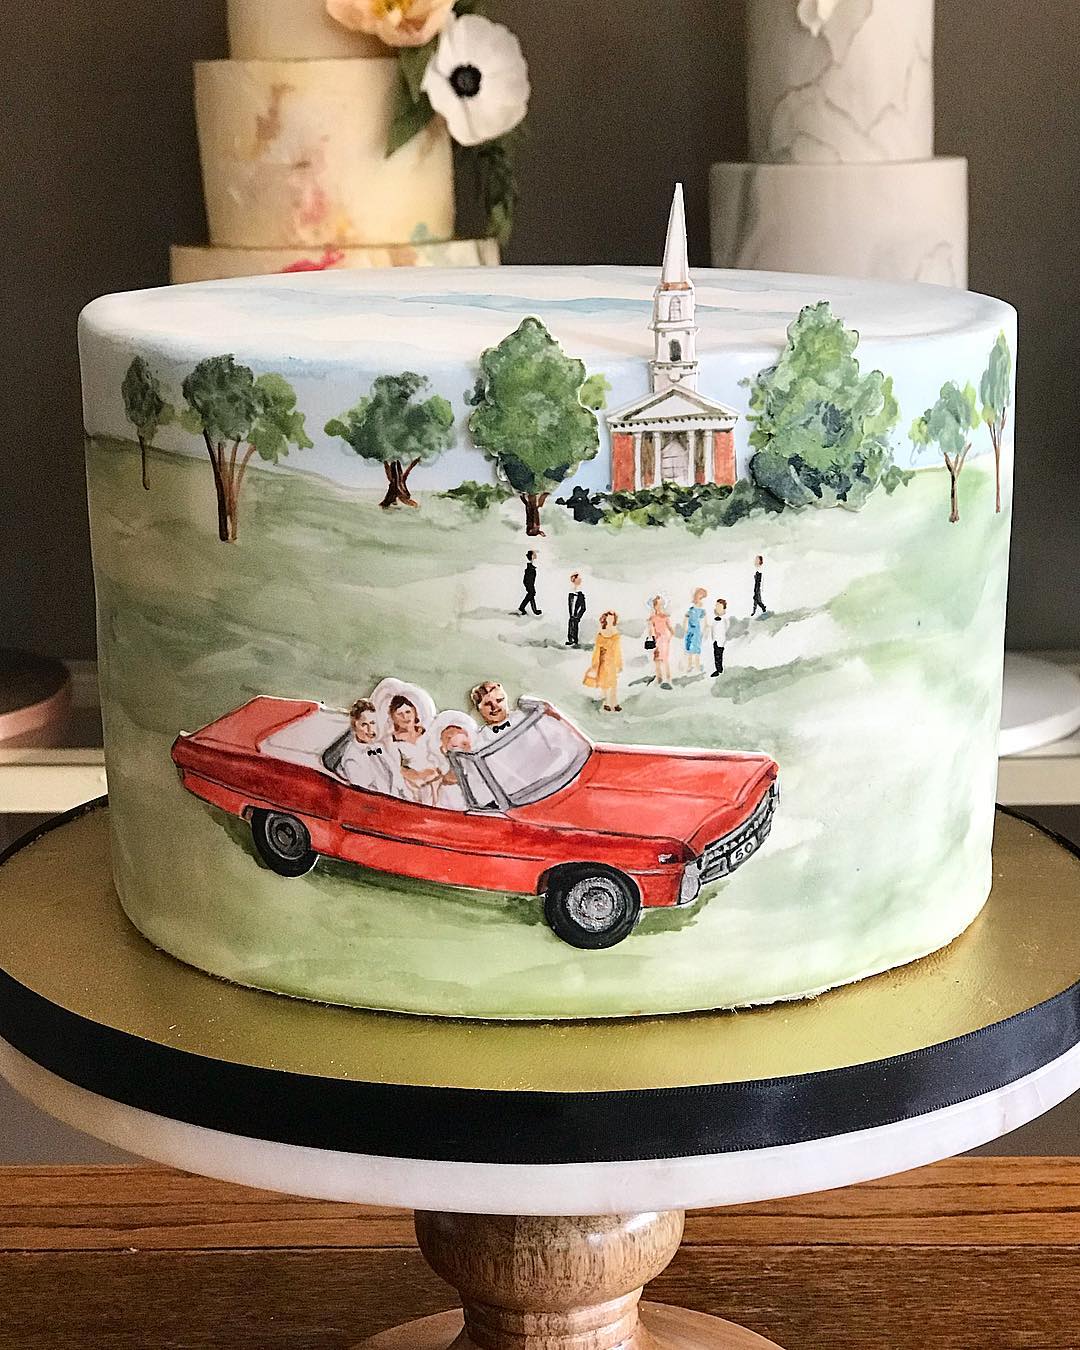 wedding cake designs 2018